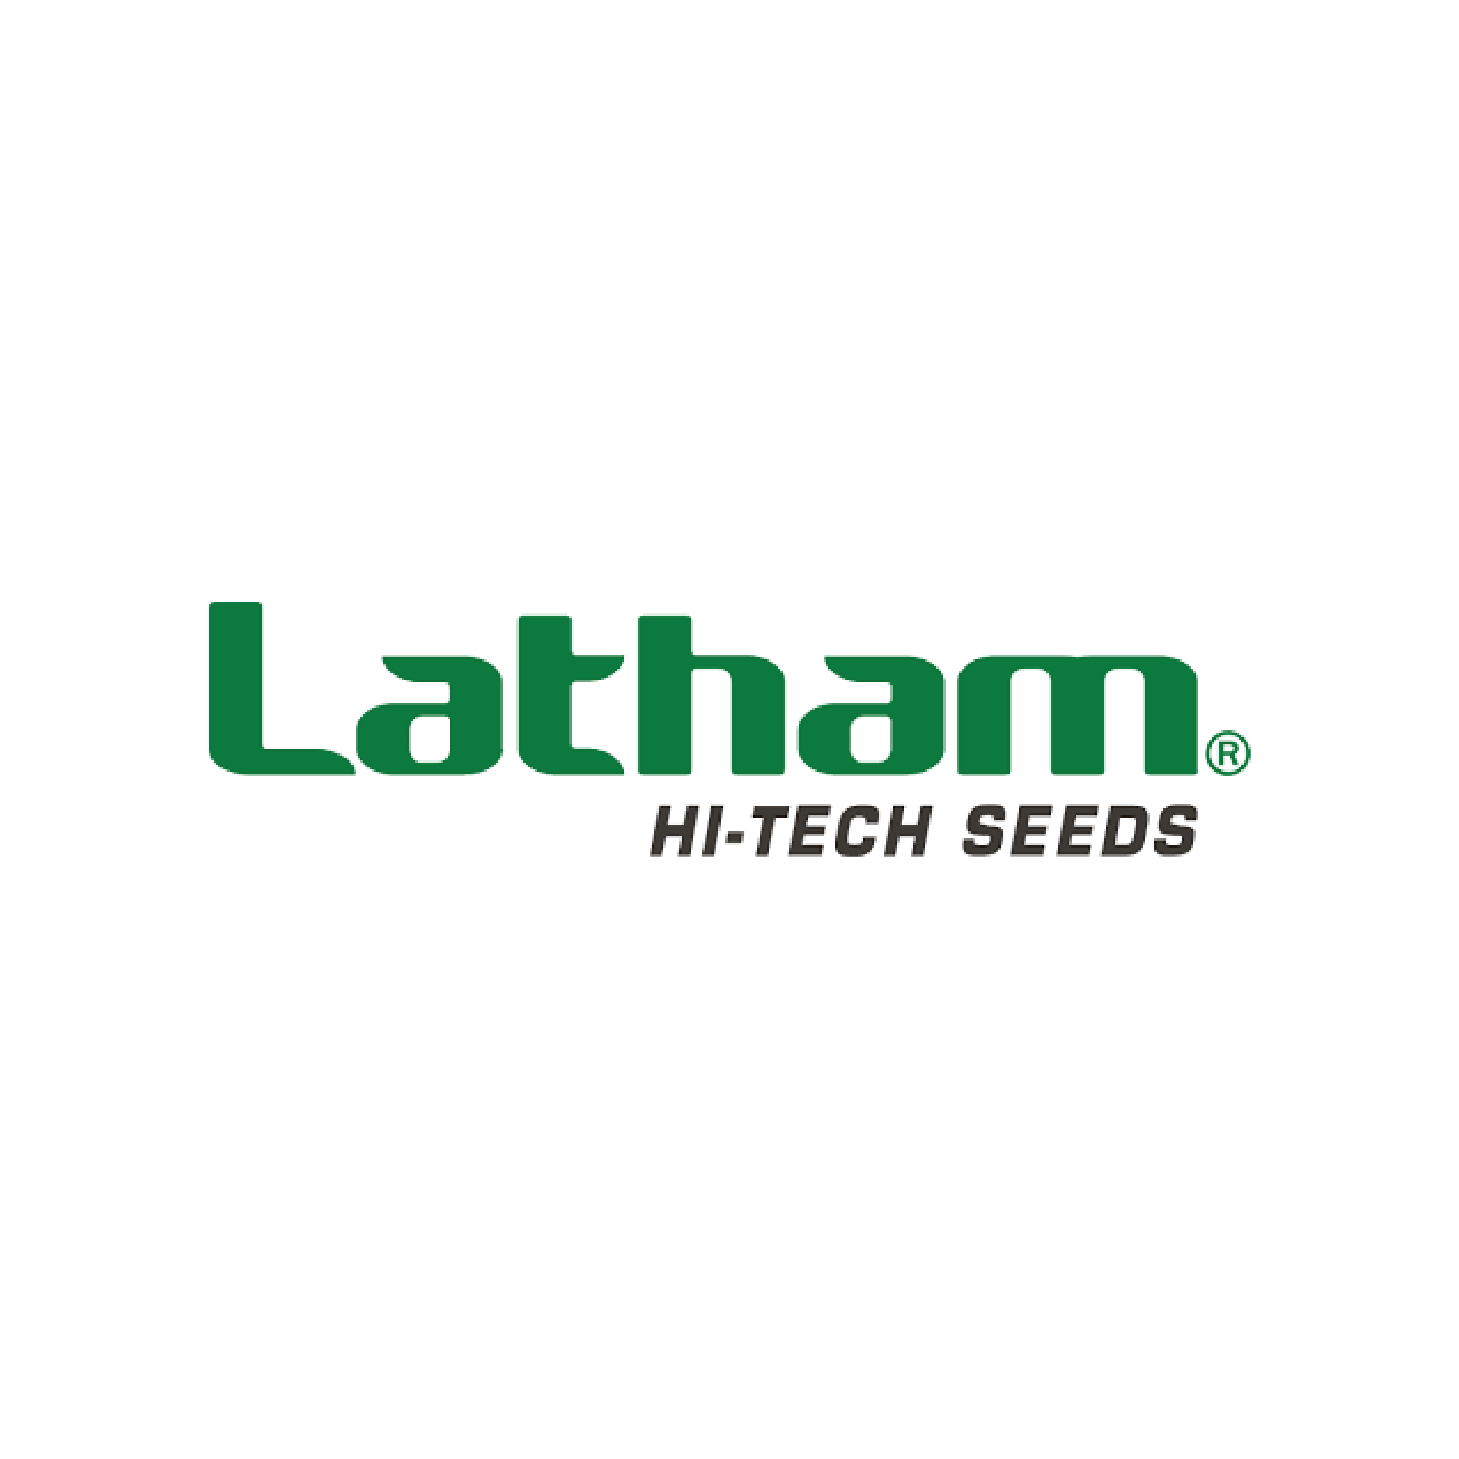 Latham Hi-tech seeds